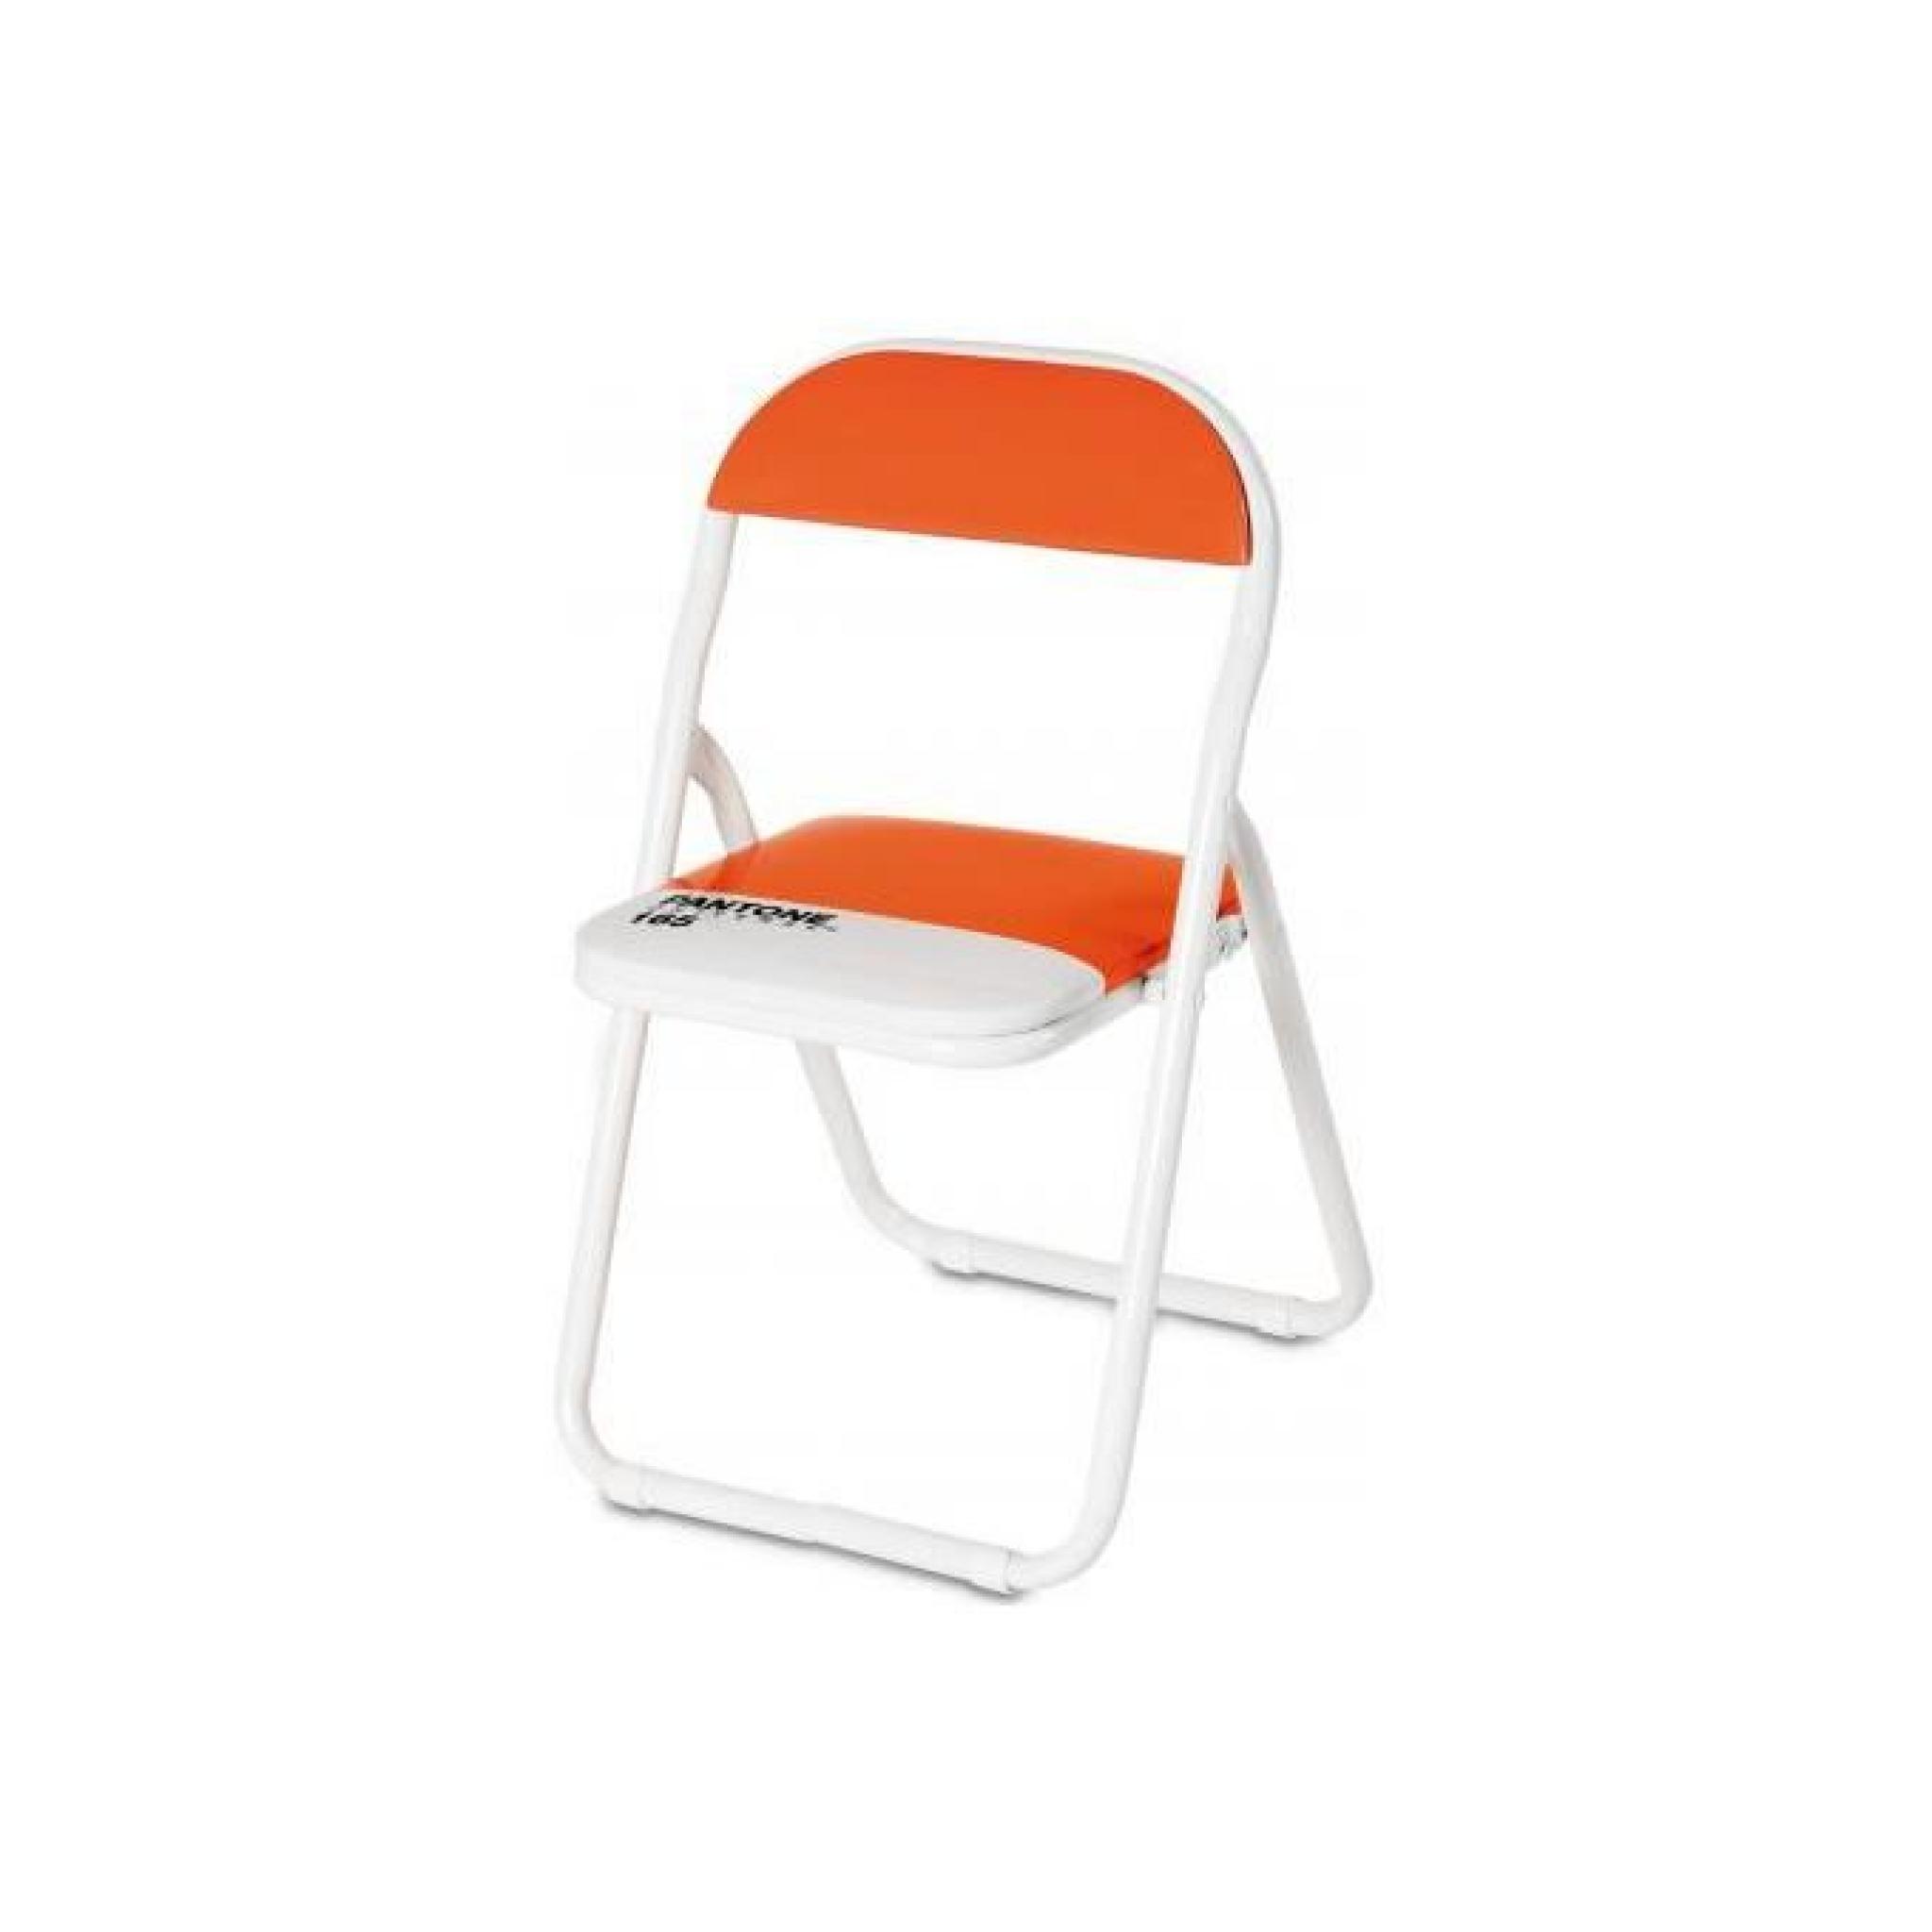 Petite chaise pliante Pantone orange Firenze Seletti